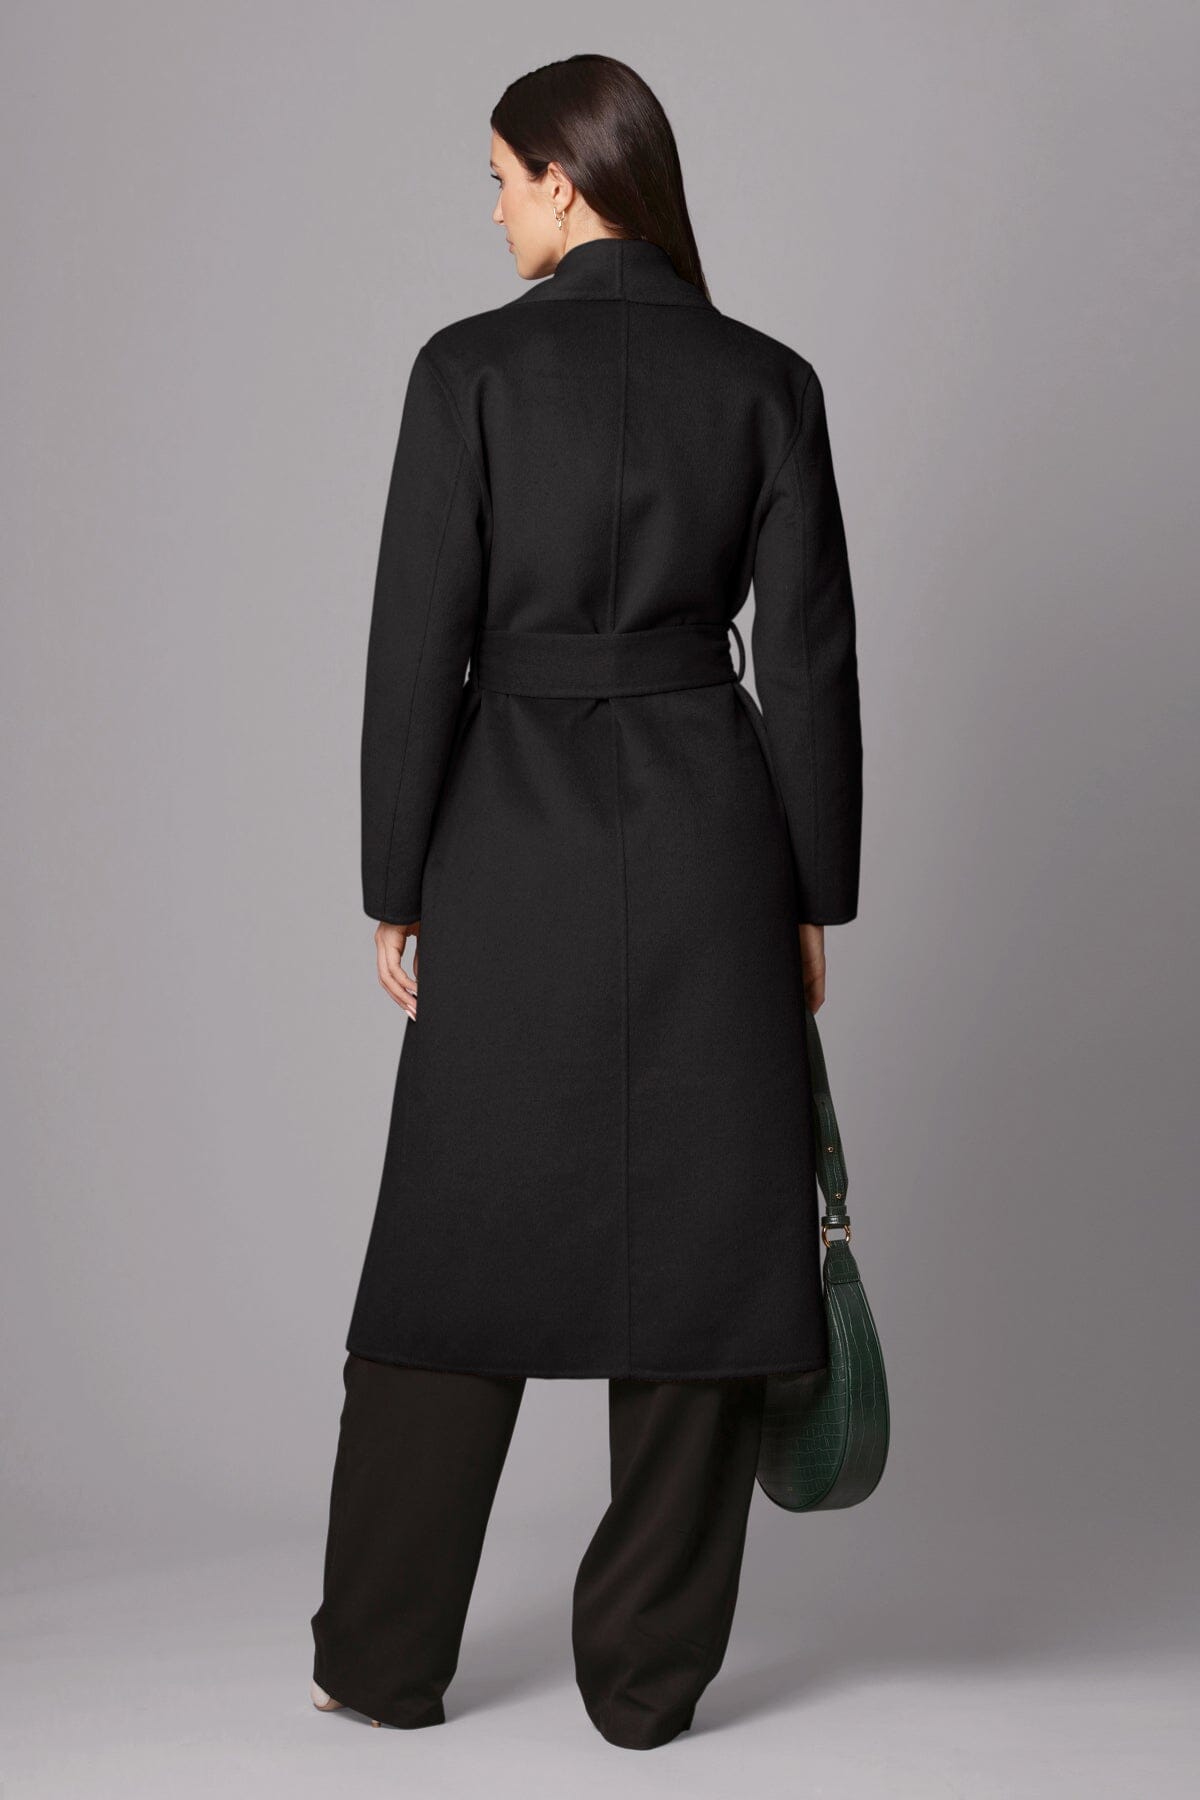 black double face wrap mid length coat - figure flattering cute fall winter coats for women